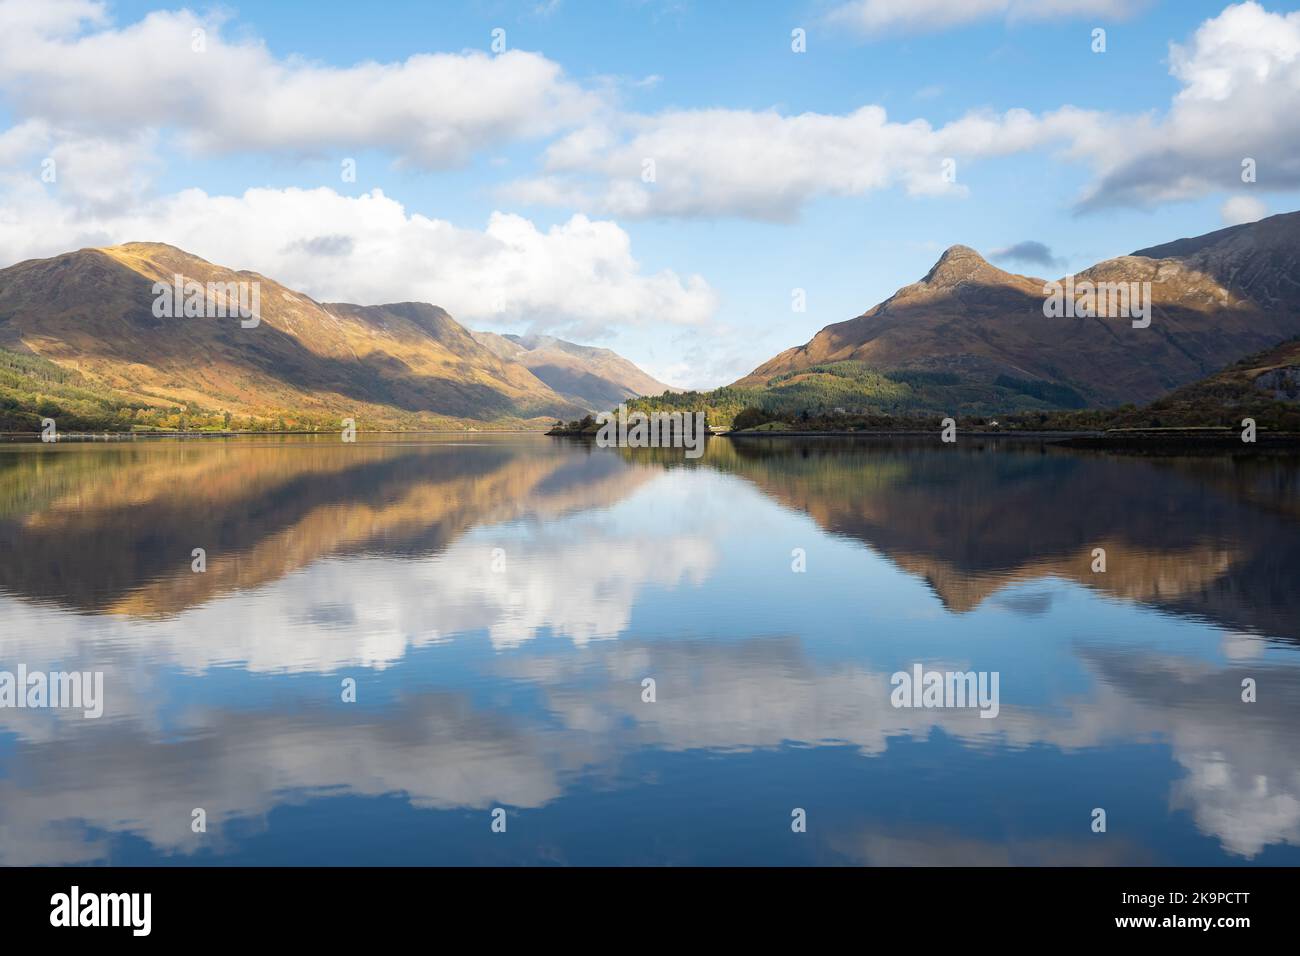 Pap of Glencoe reflected in Loch Leven, Scotland, UK Stock Photo